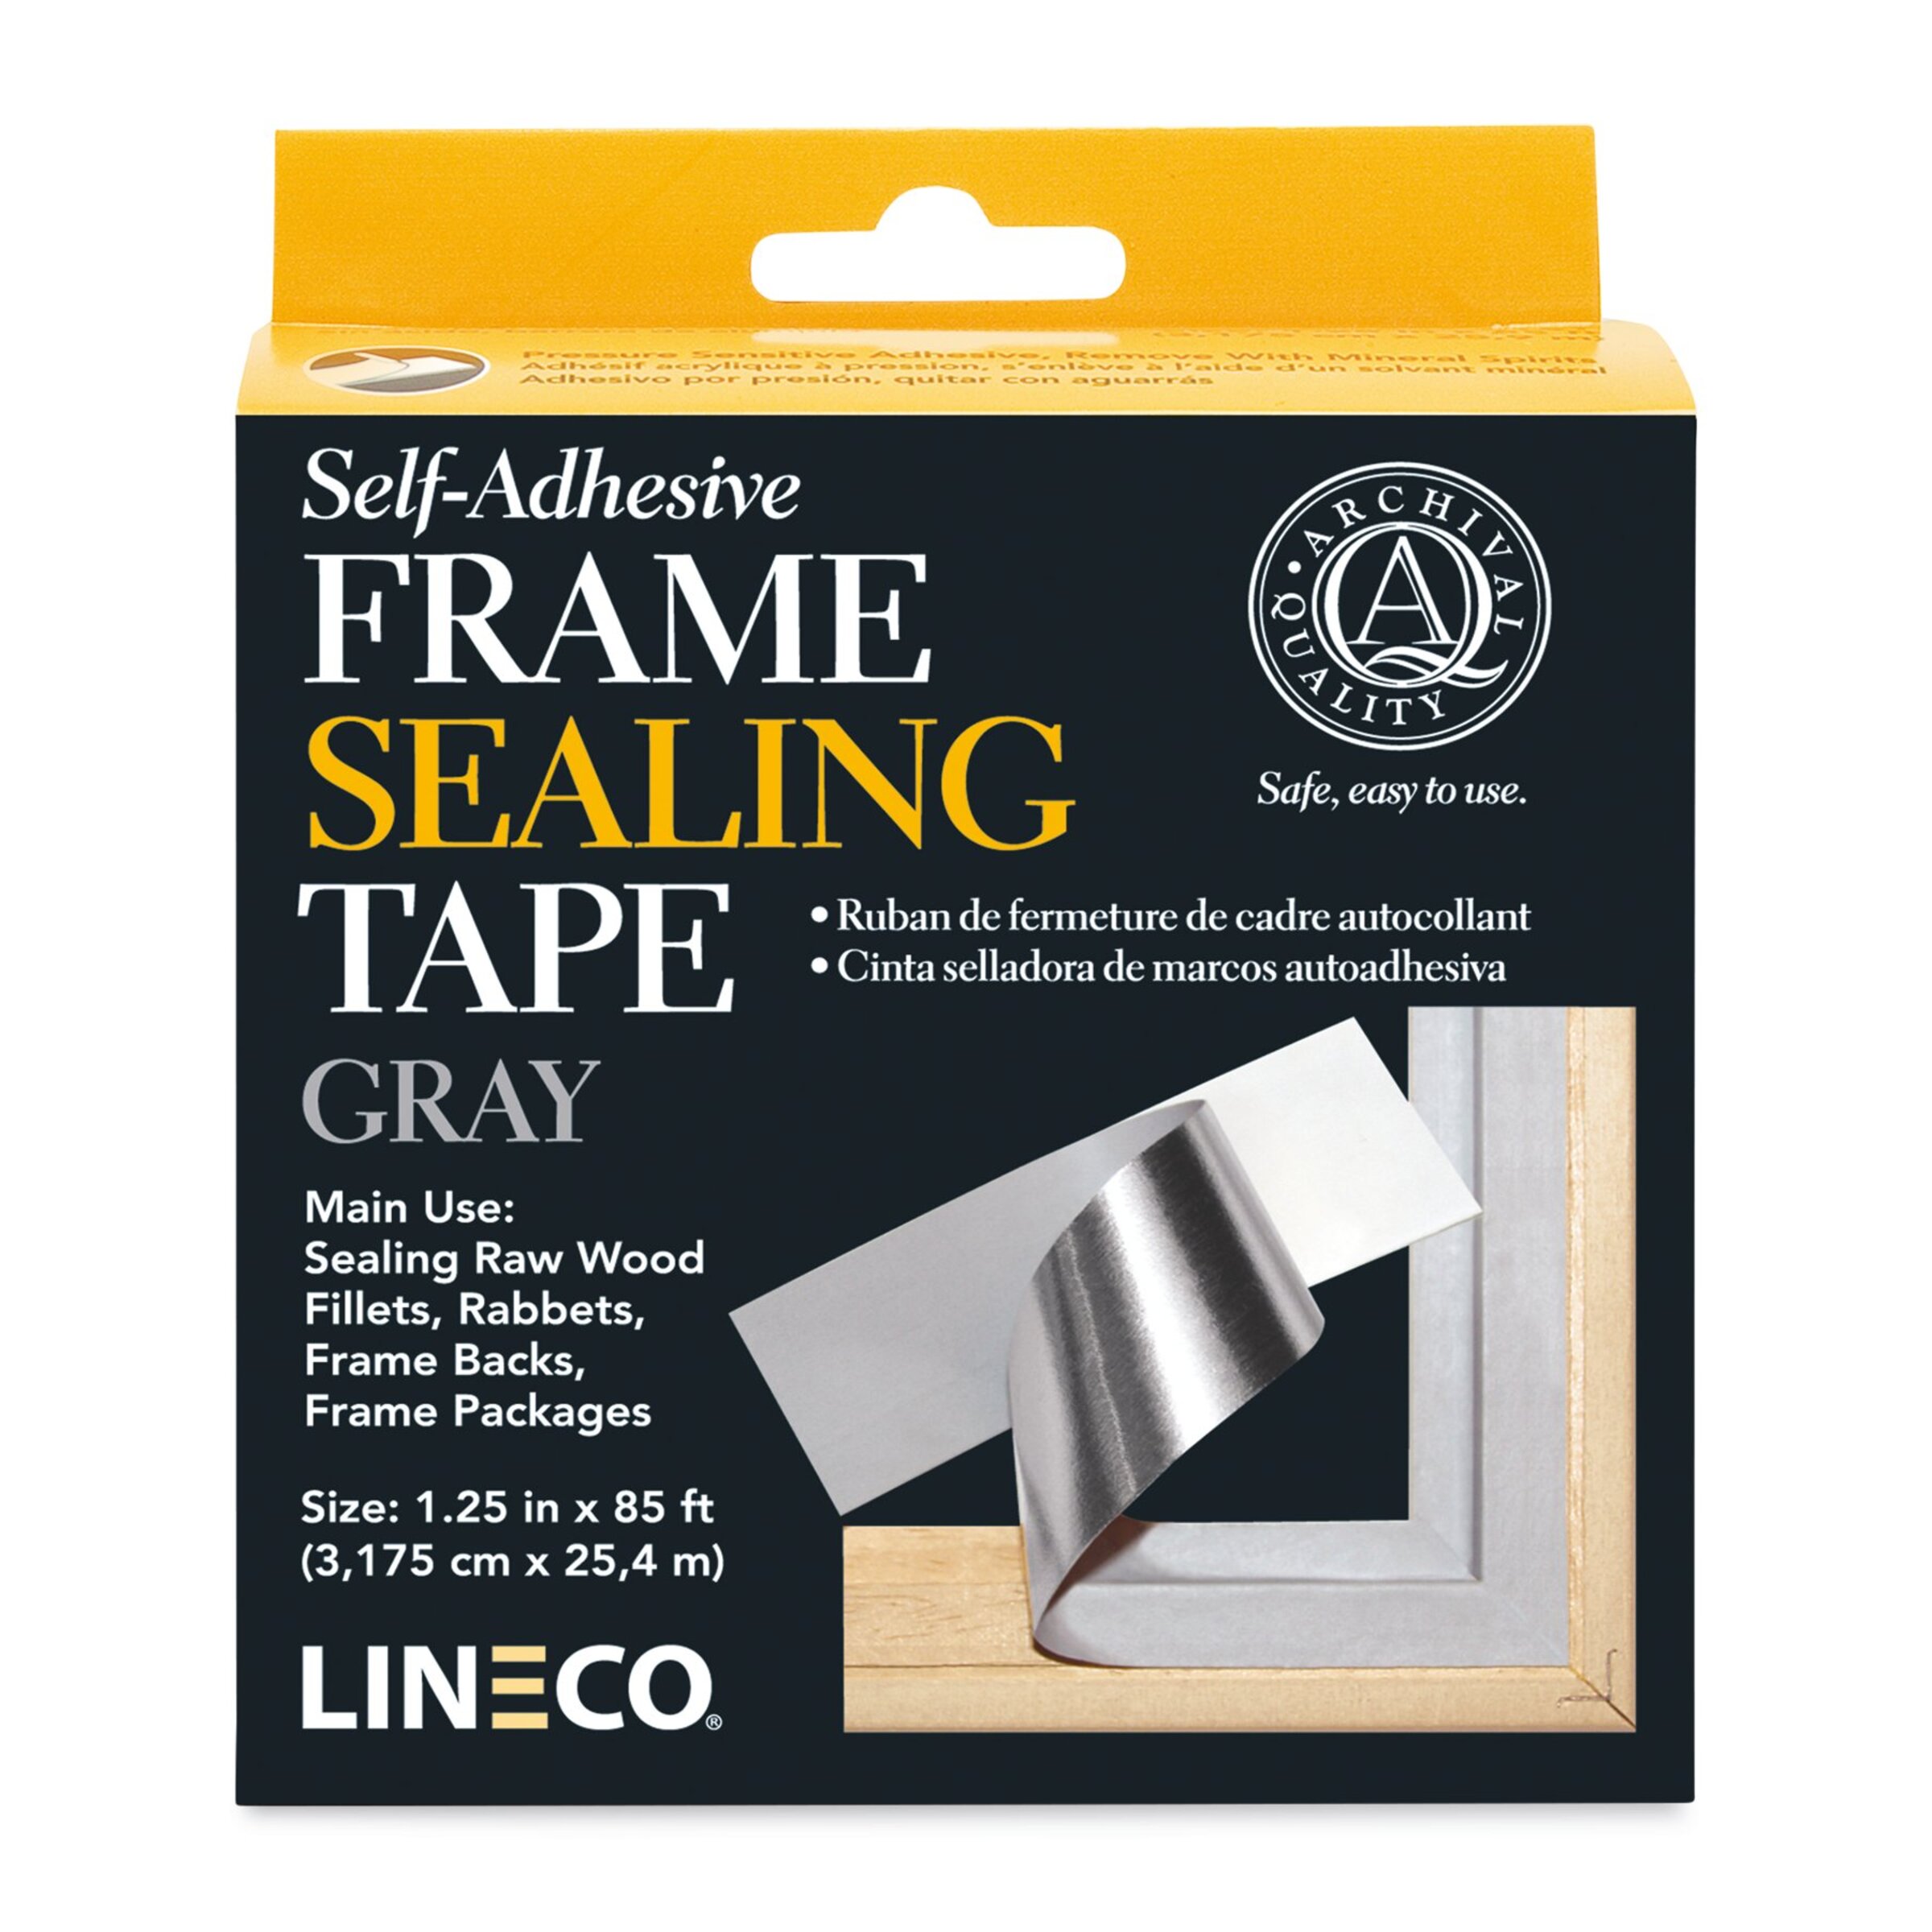 Lineco | Gummed Paper Hinging Tape 1in x 130ft